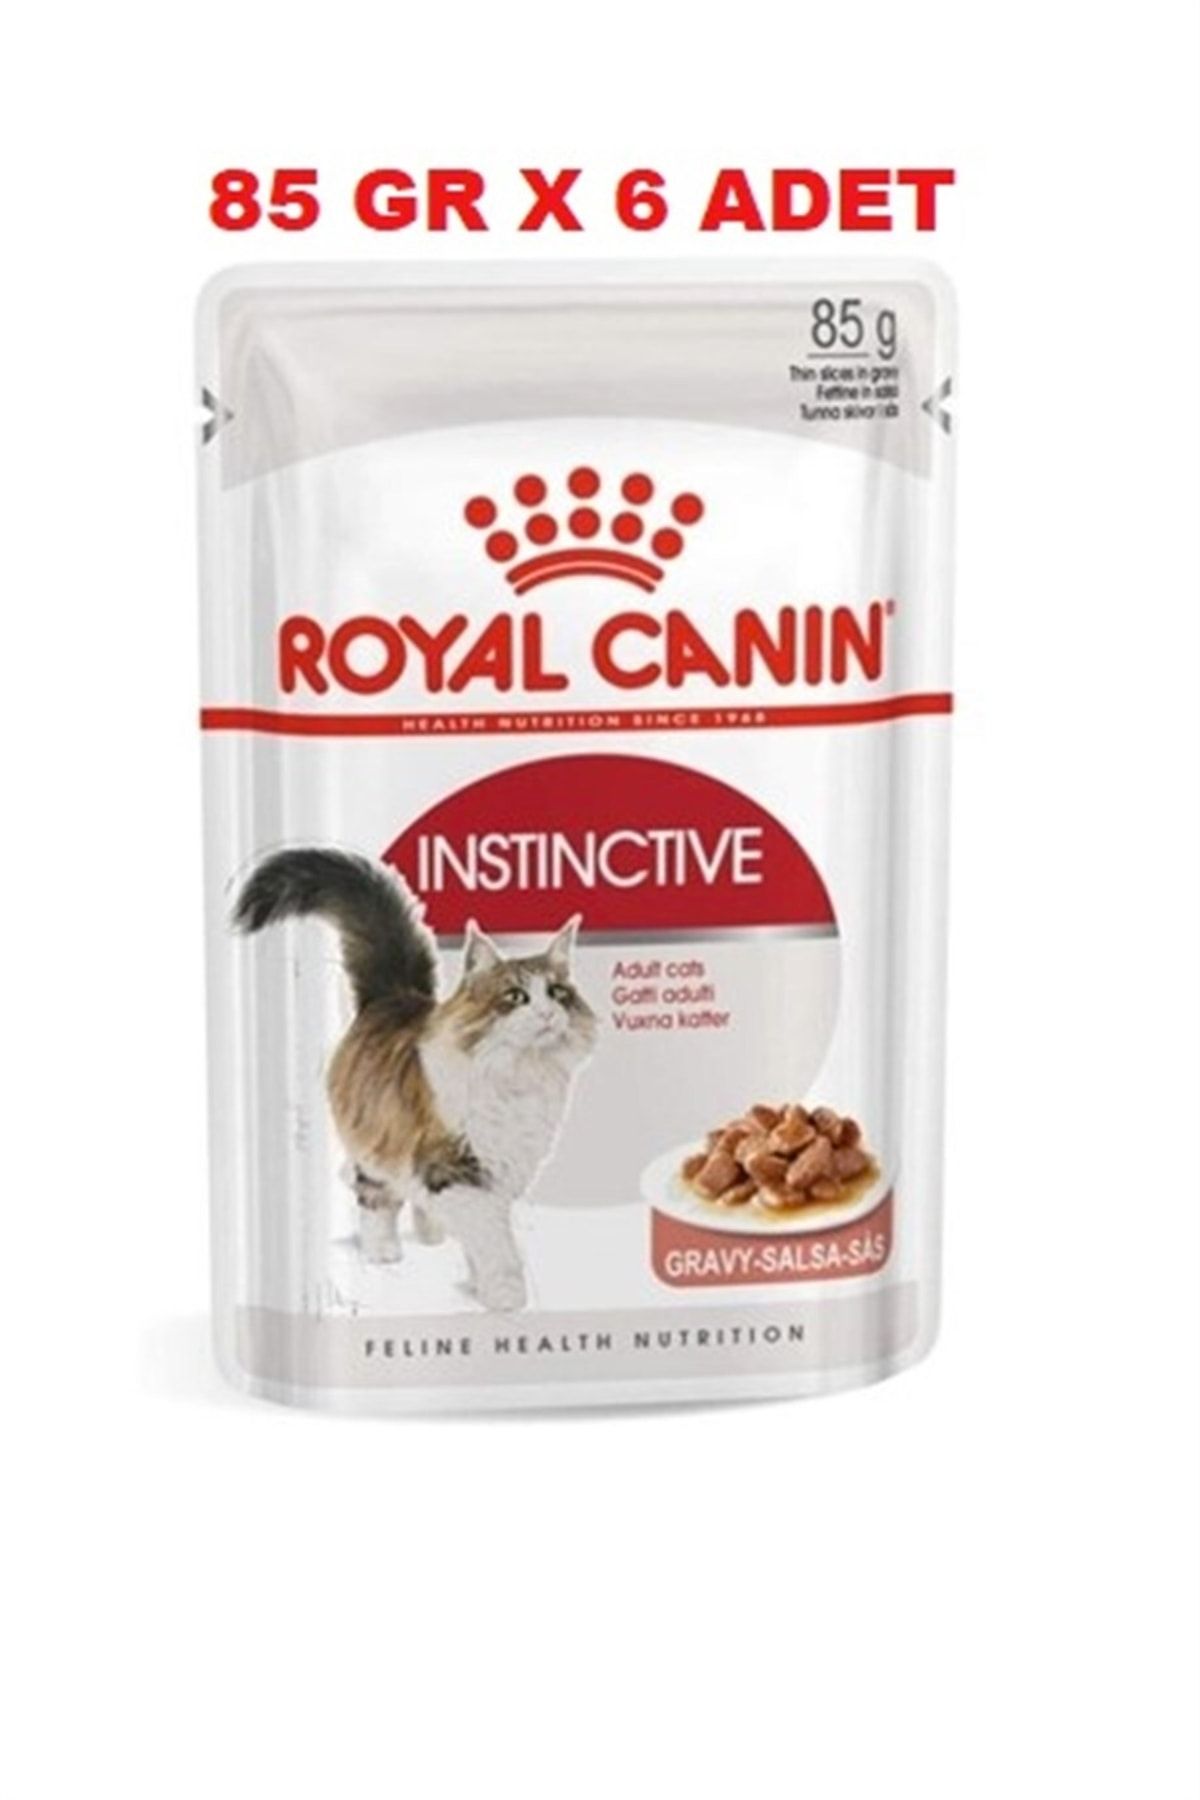 Royal Canin Instinctive Gravy Pouch 85 Gr X 6 Adet